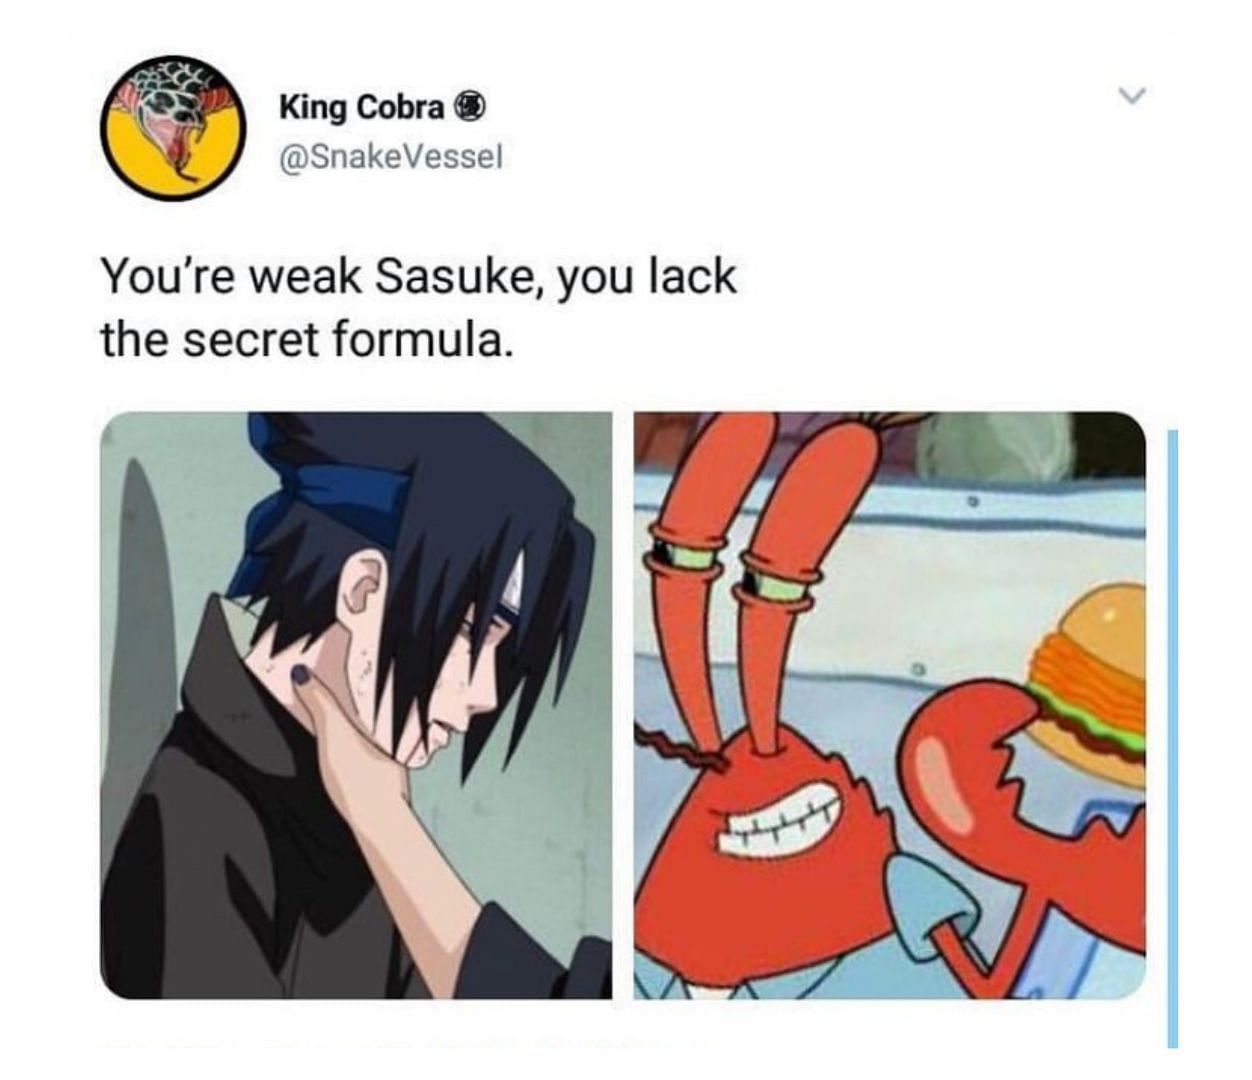 Choking Sasuke meme with Mr Krabs (Image via Twitter)